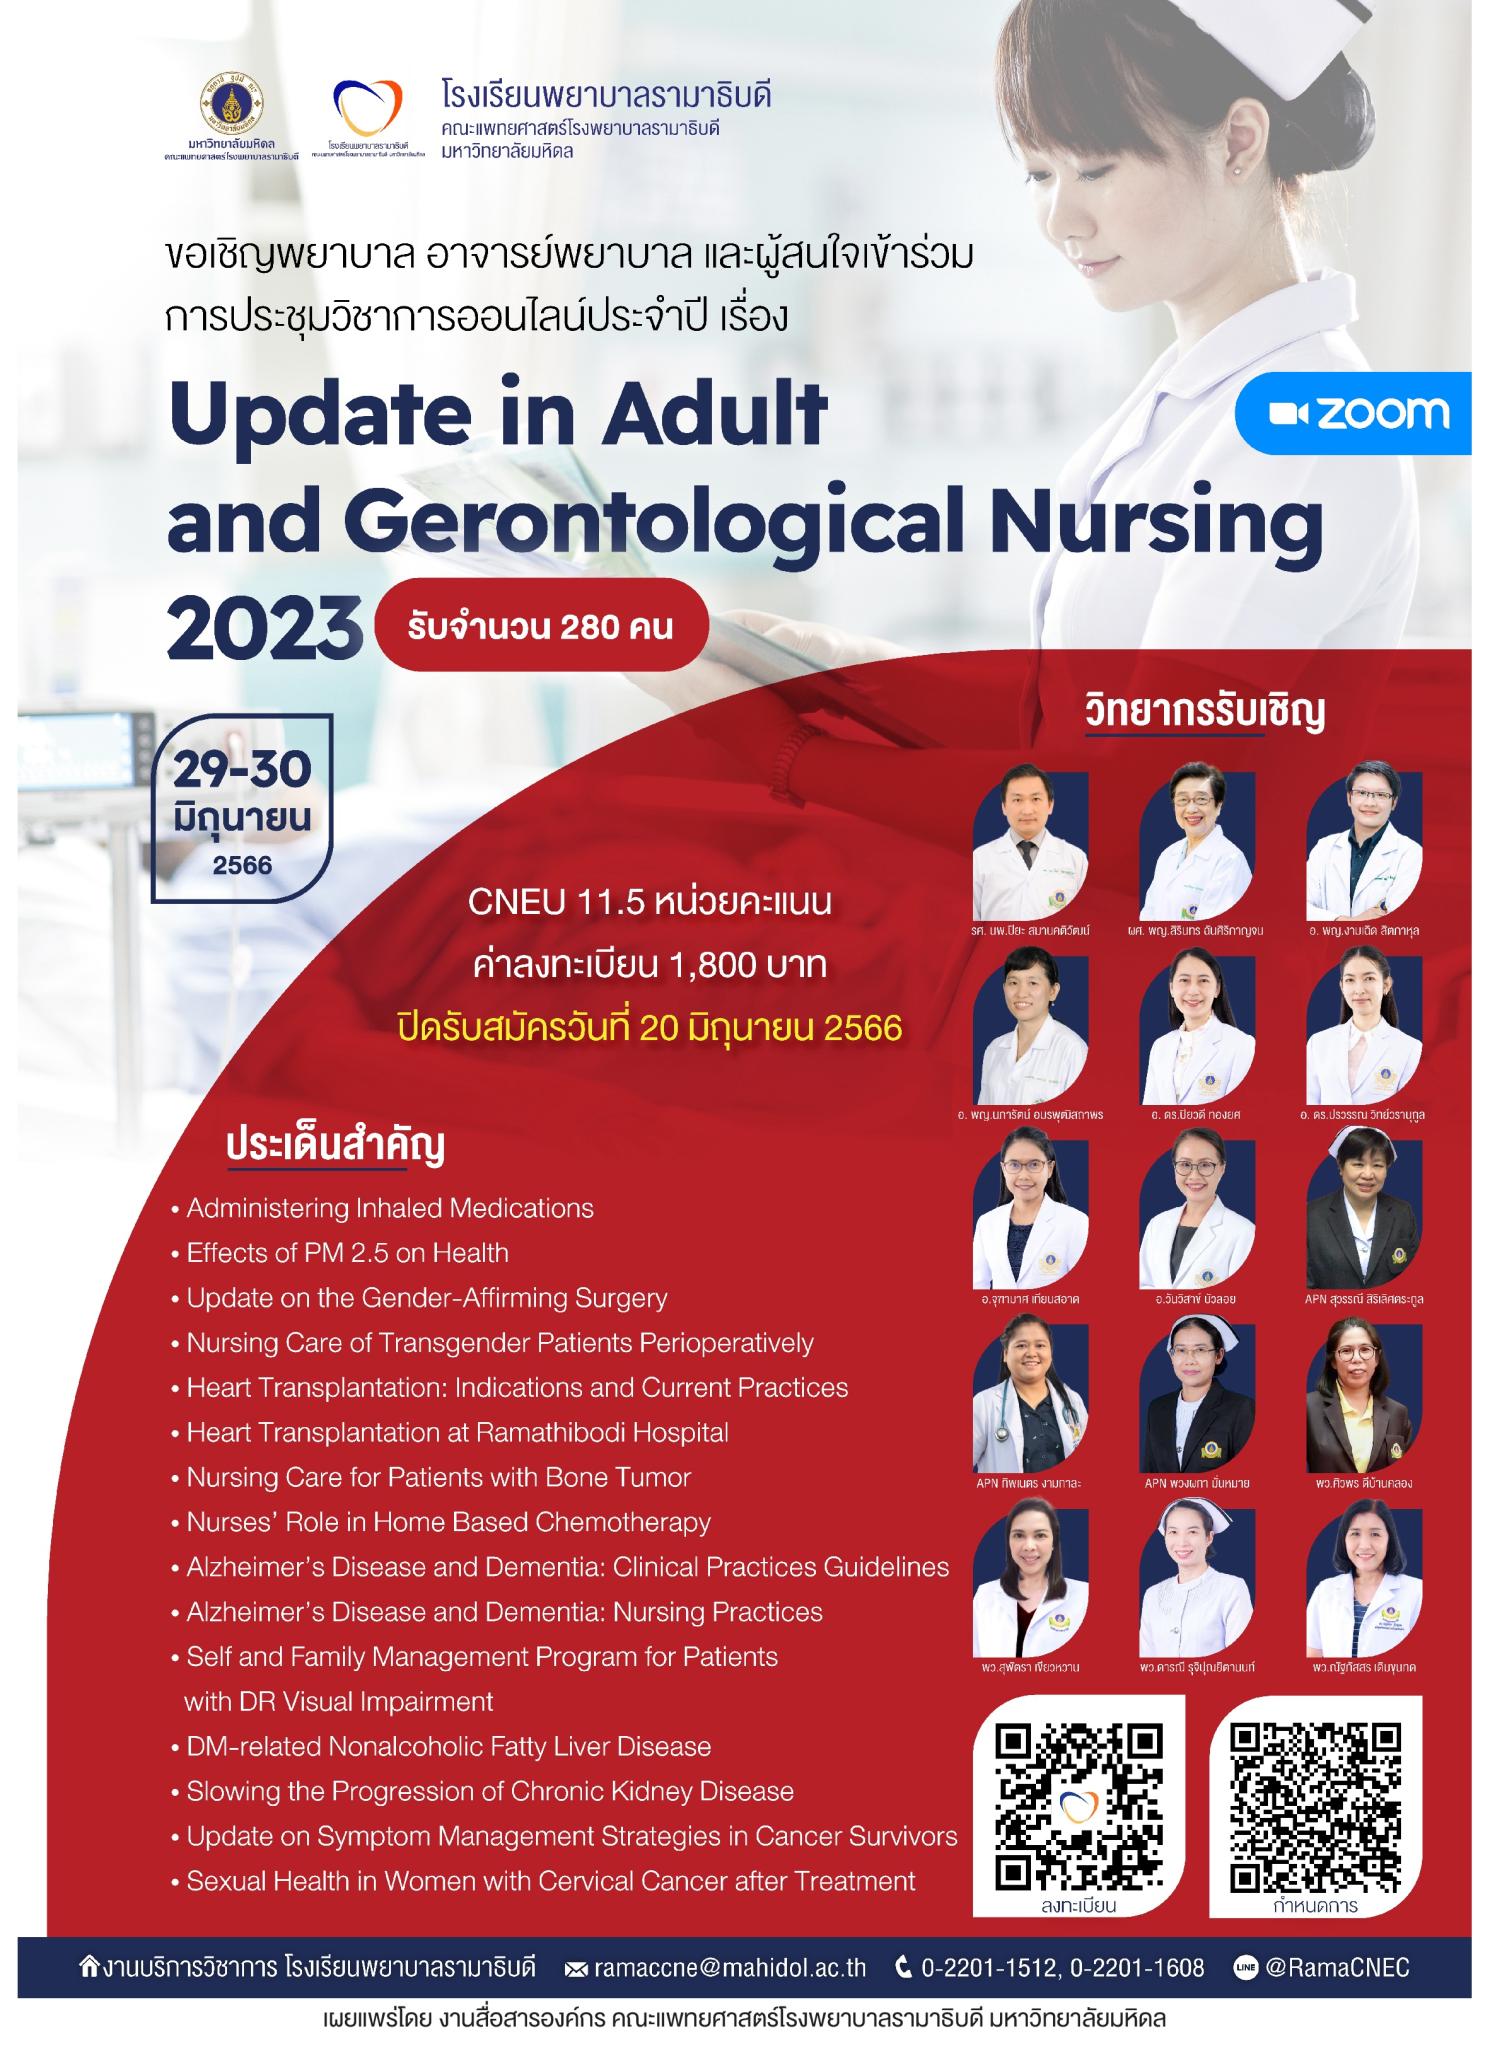 Update in Adult and Gerontological Nursing 2023